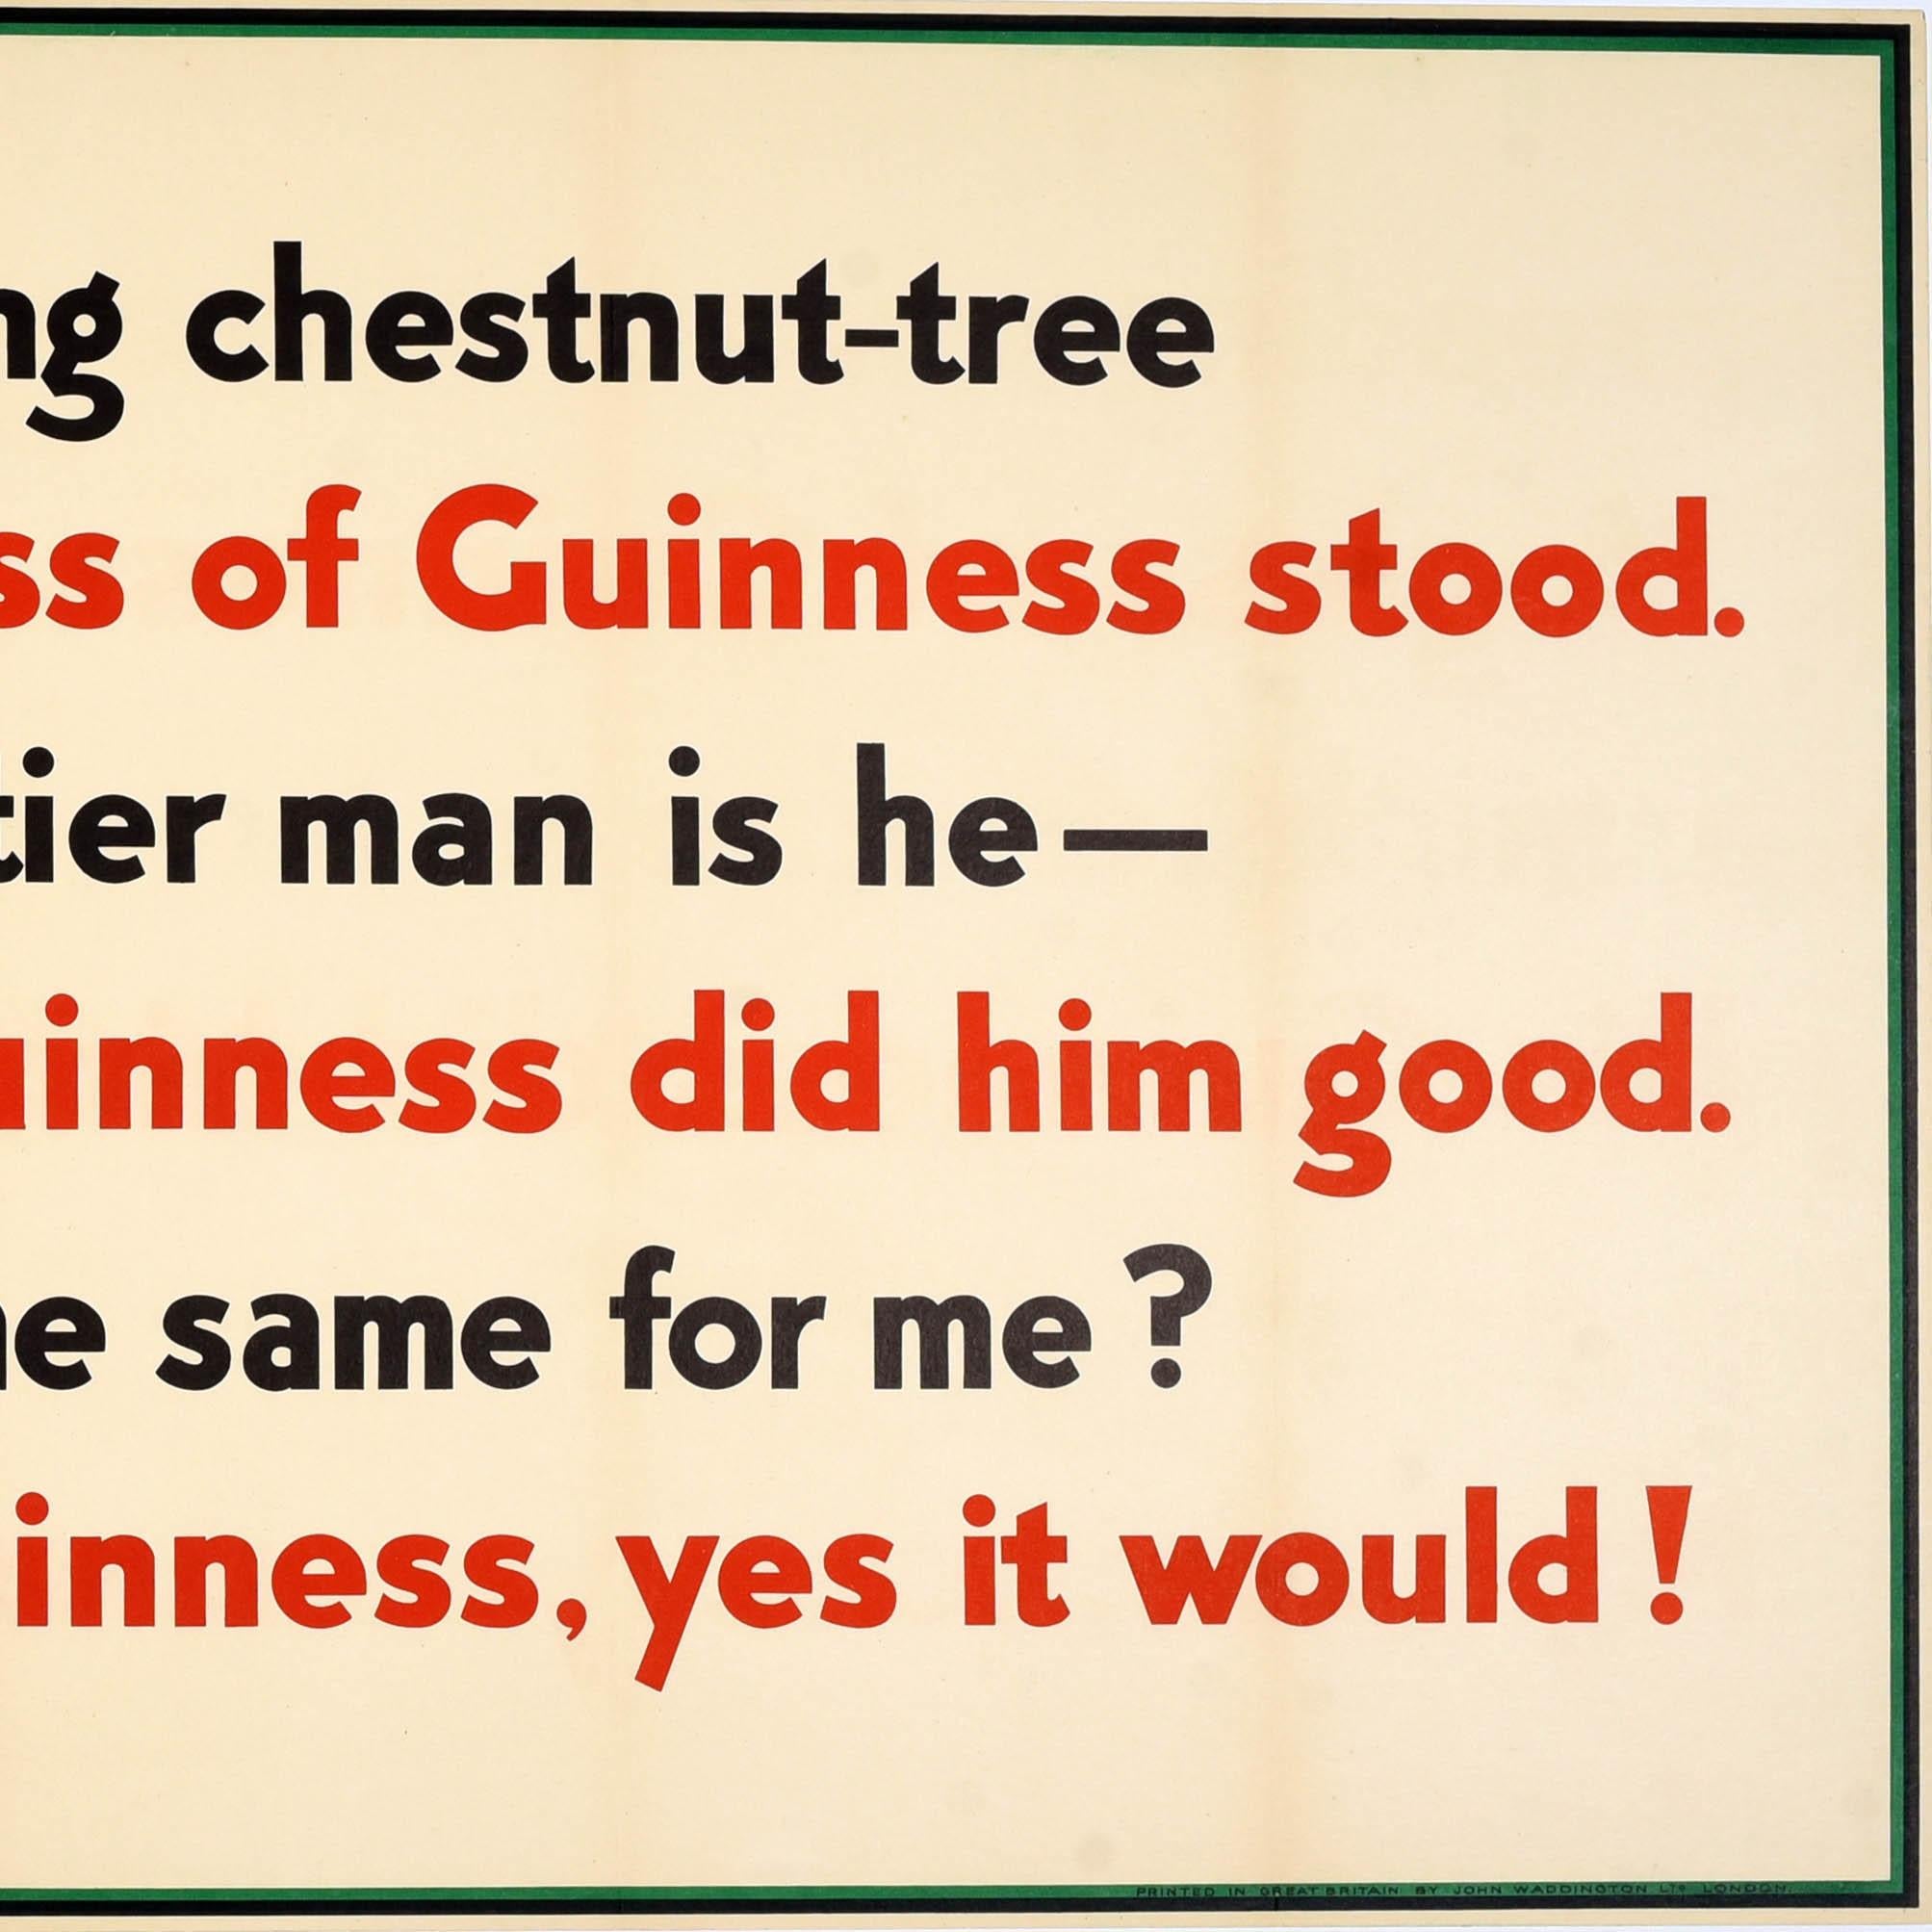 British Original Vintage Advertising Poster Guinness Chestnut Tree Irish Dry Stout Beer For Sale